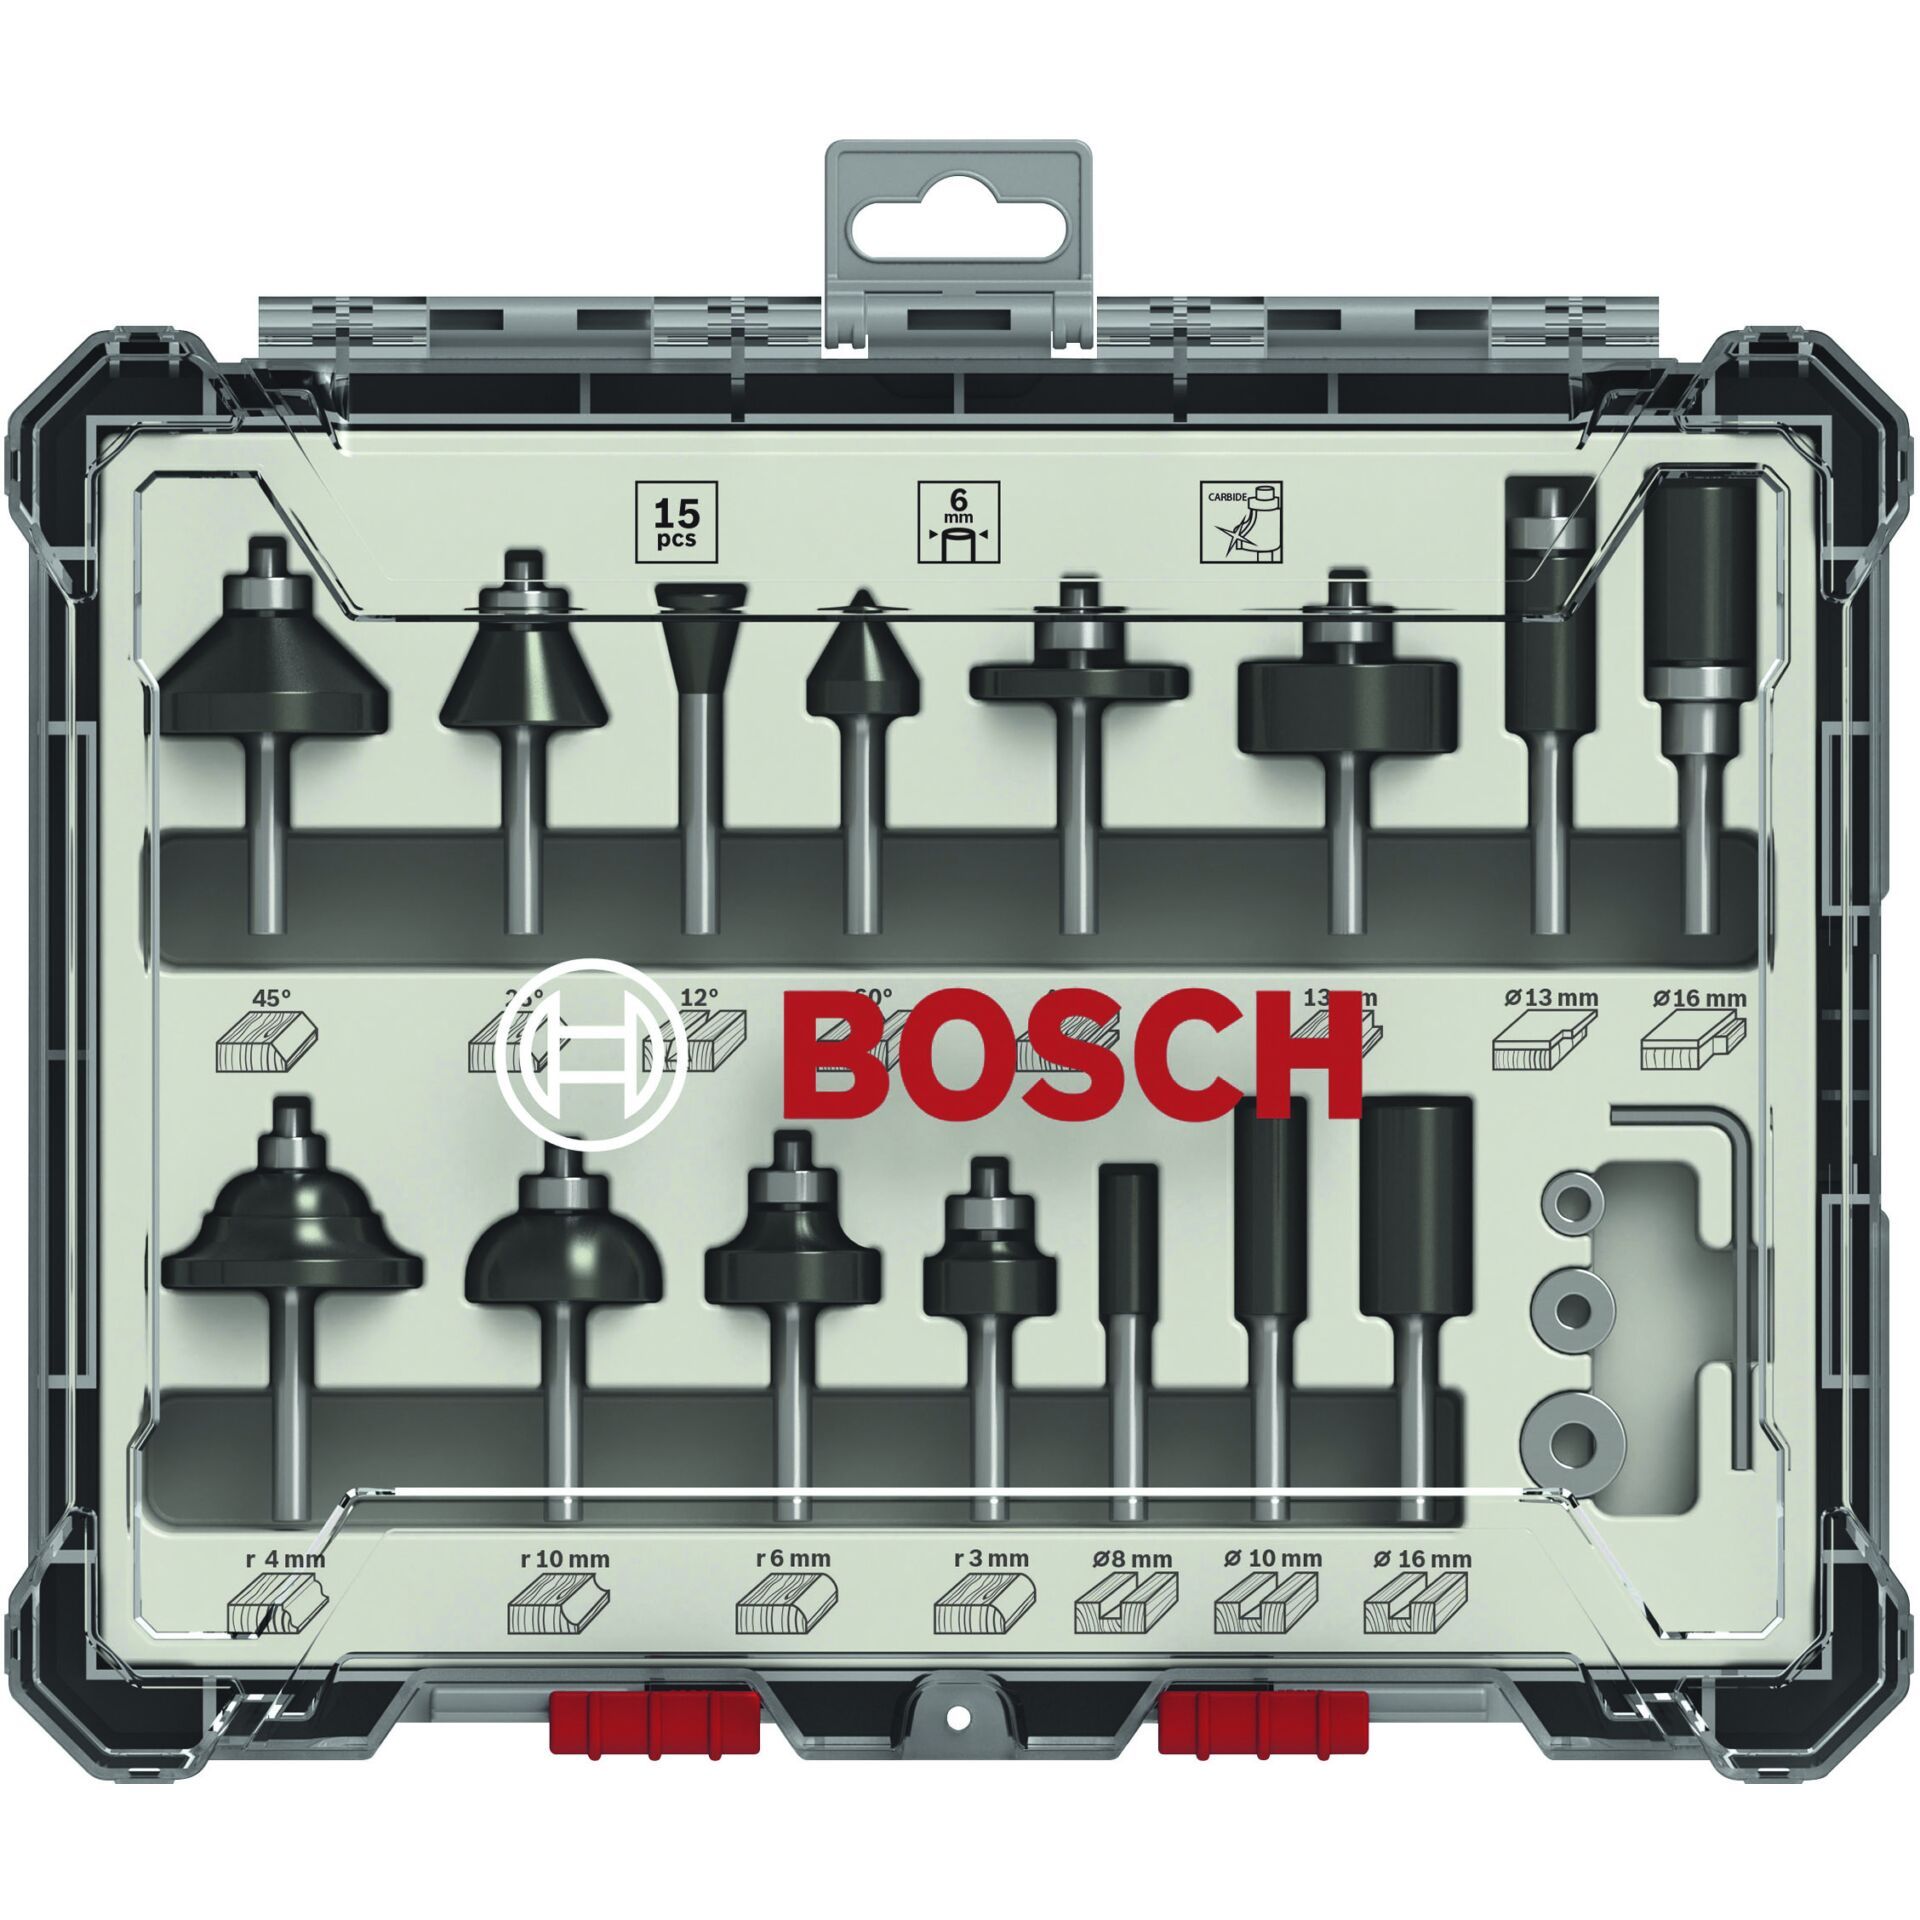 Bosch 15 pcs Wood Bit Set for 6mm Shank Router